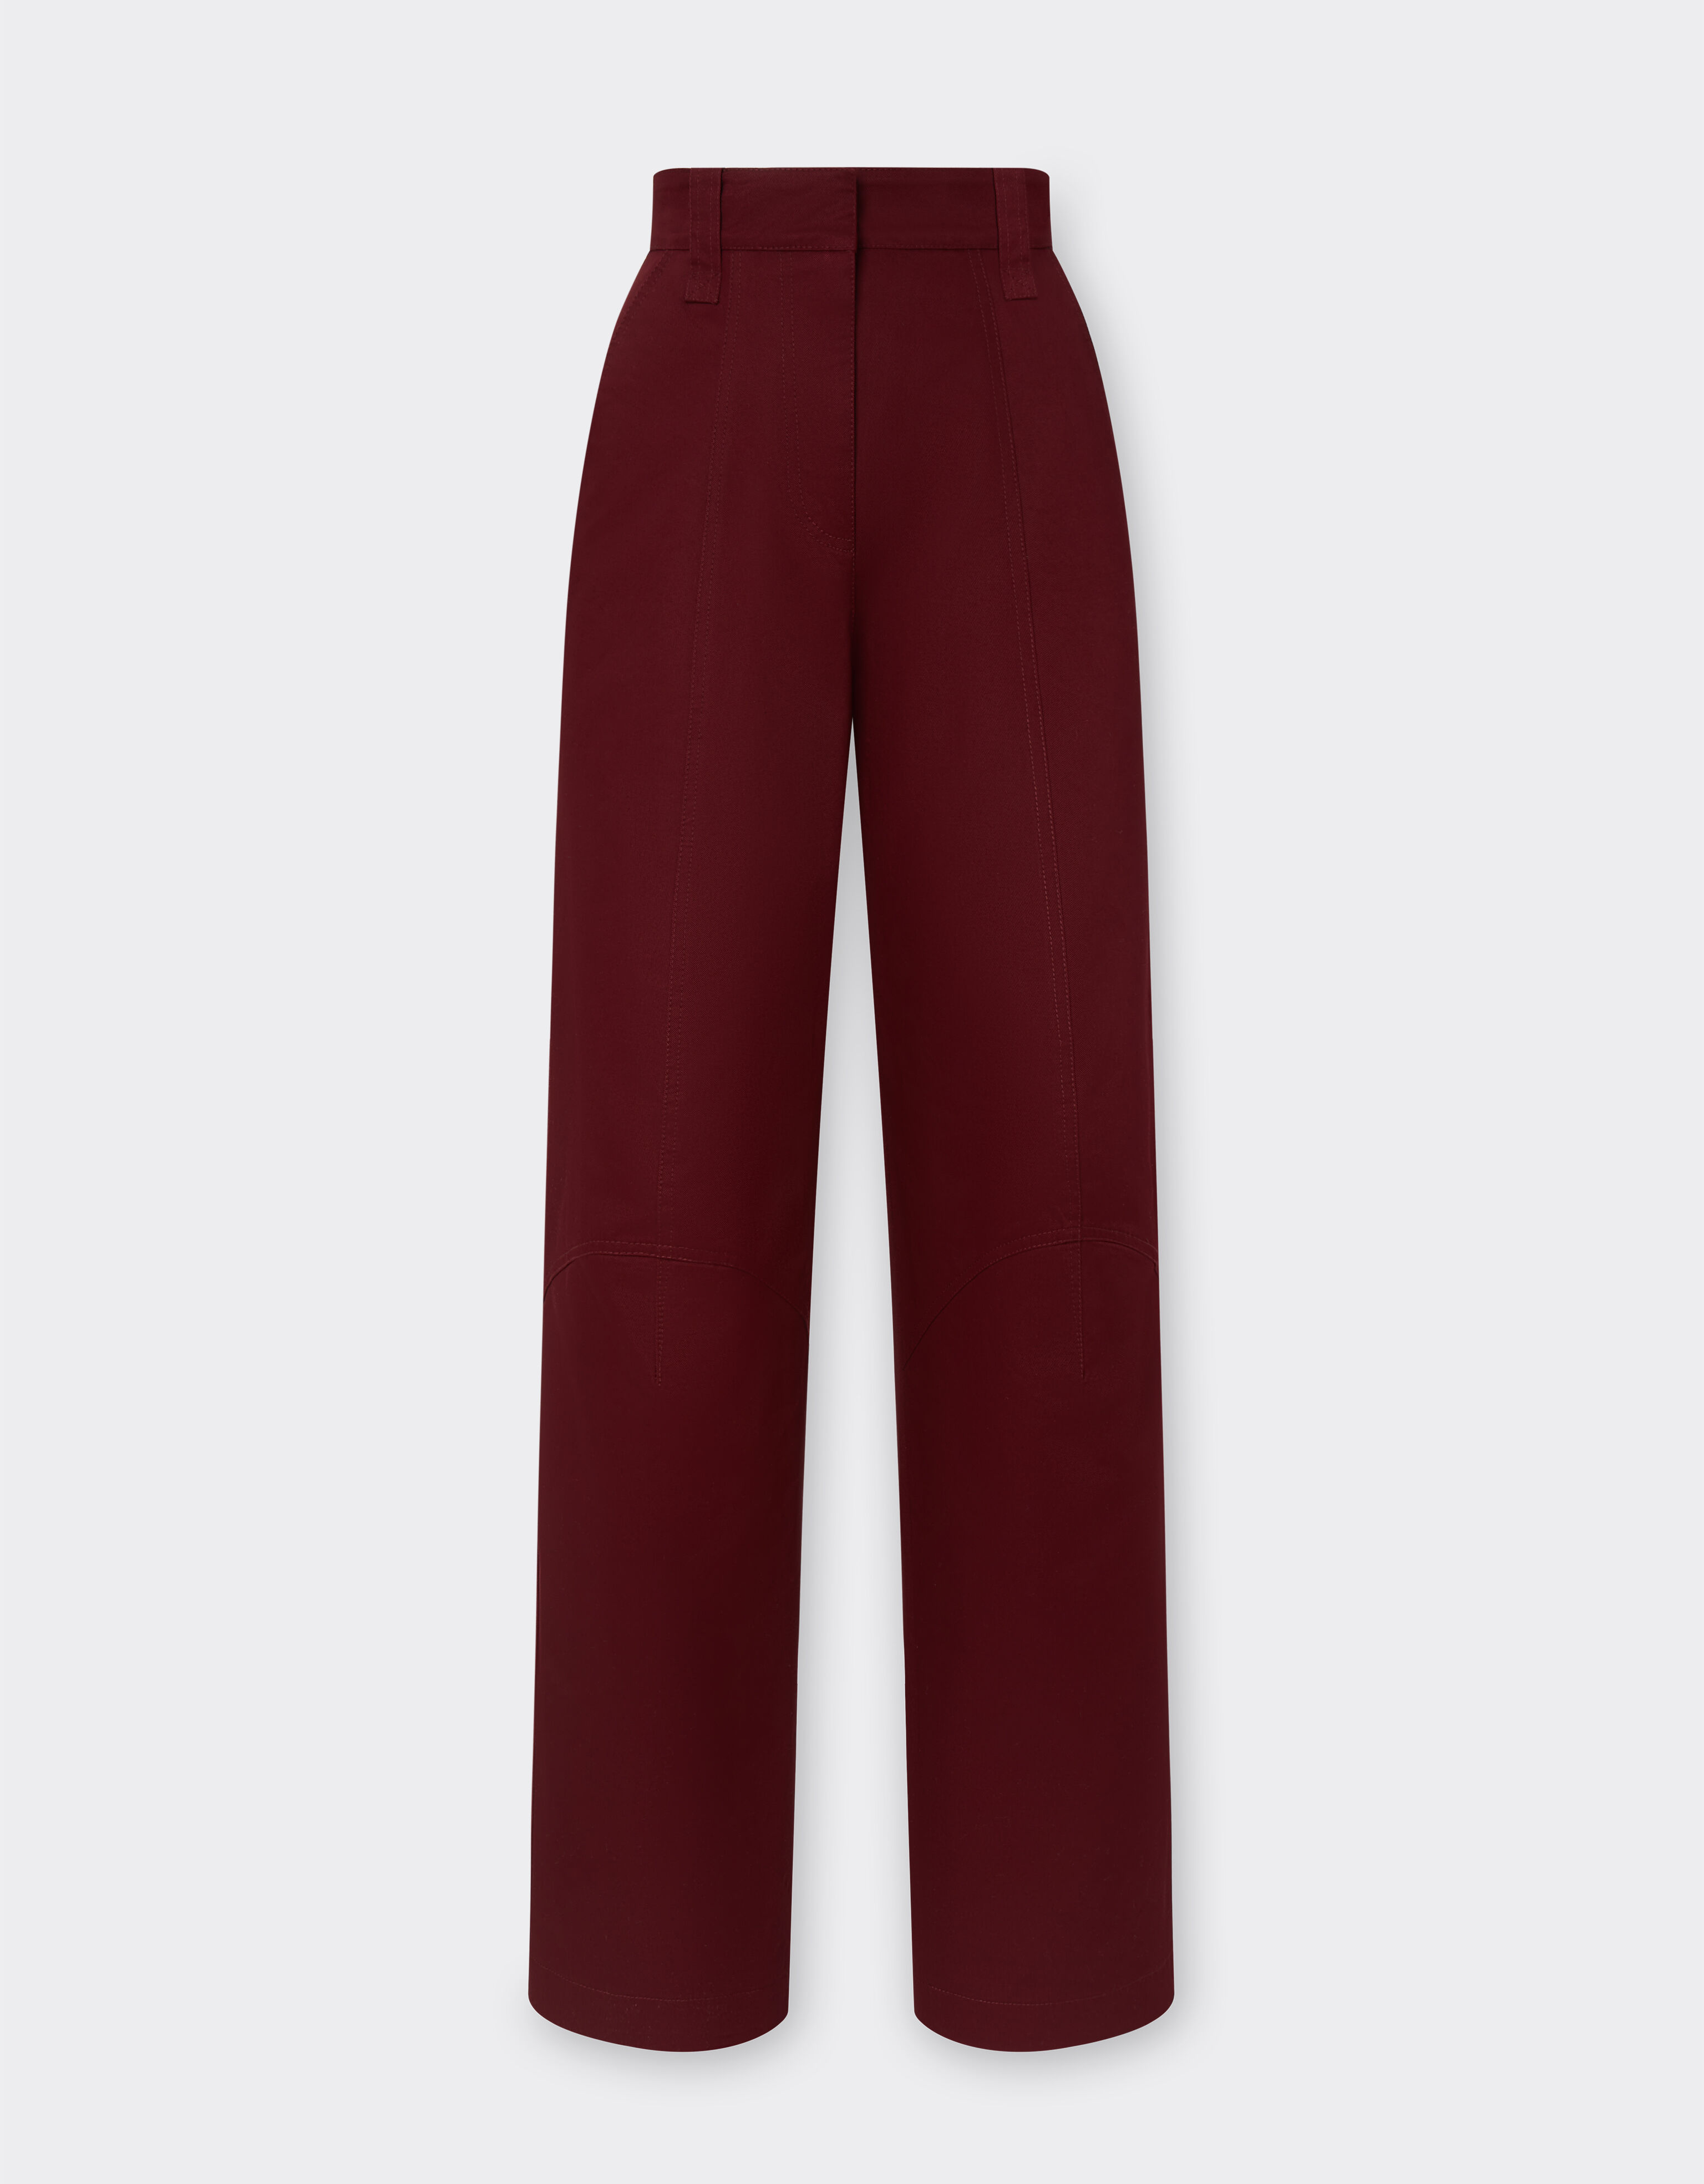 Ferrari Pantalones chinos de algodón Gris oscuro 21246f